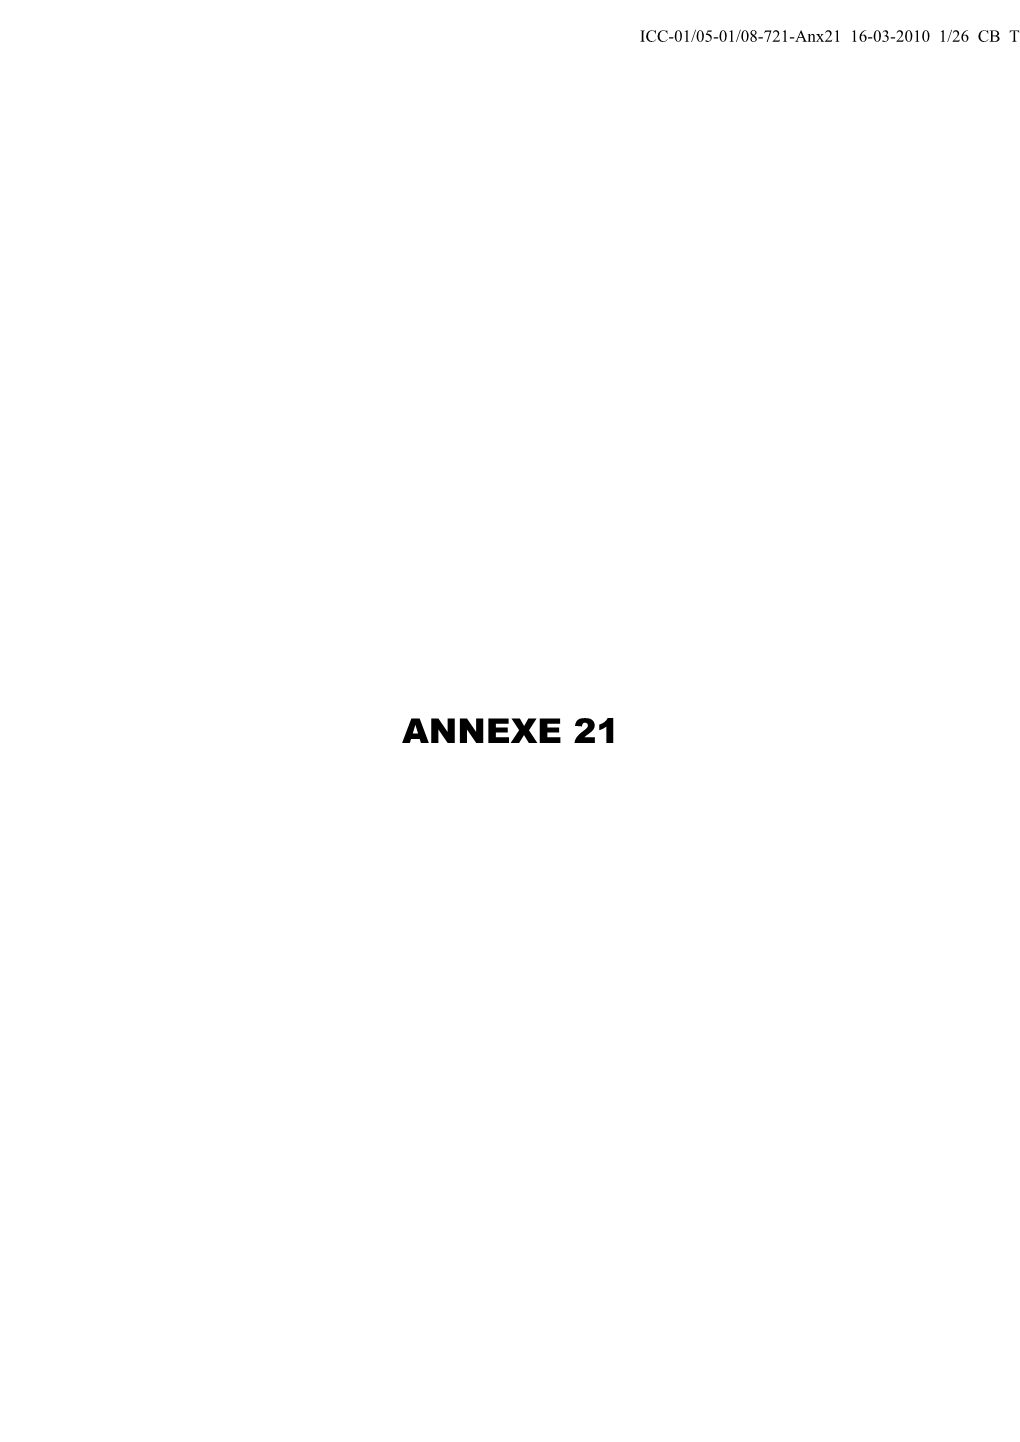 ANNEXE 21 ICC-01/05-01/08-721-Anx21 16-03-2010 2/26 CB T